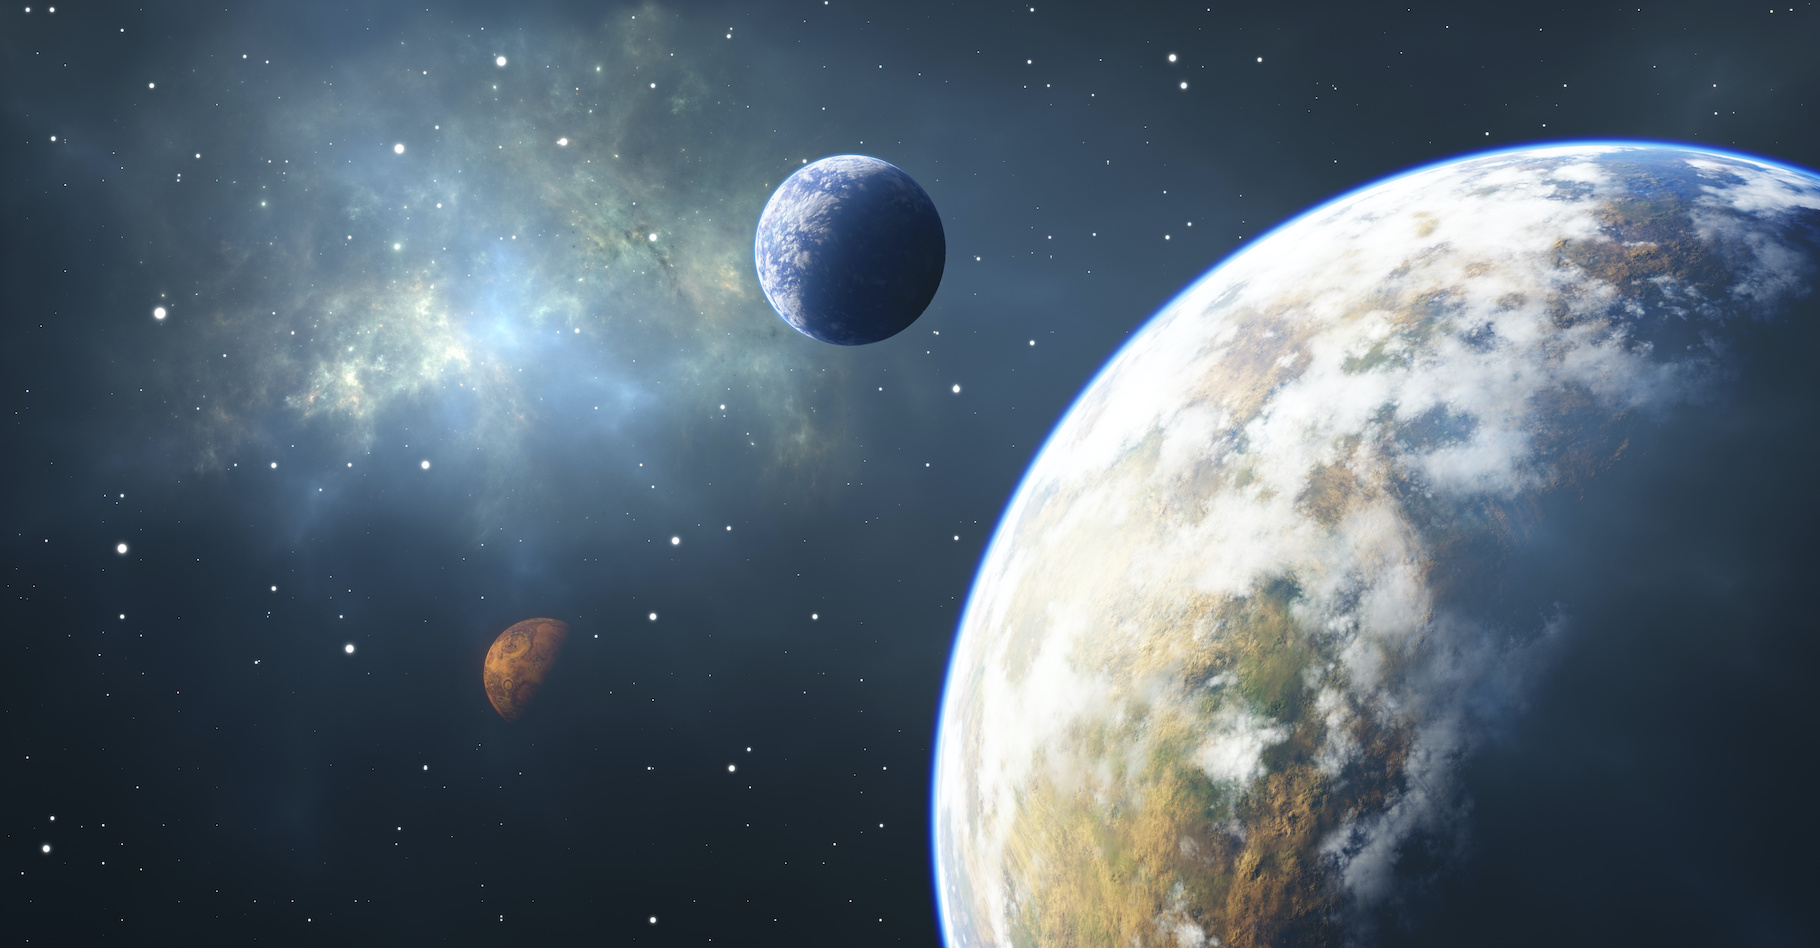 Vue d'artiste d'exoplanètes. © Peter Jurik, Adobe Stock